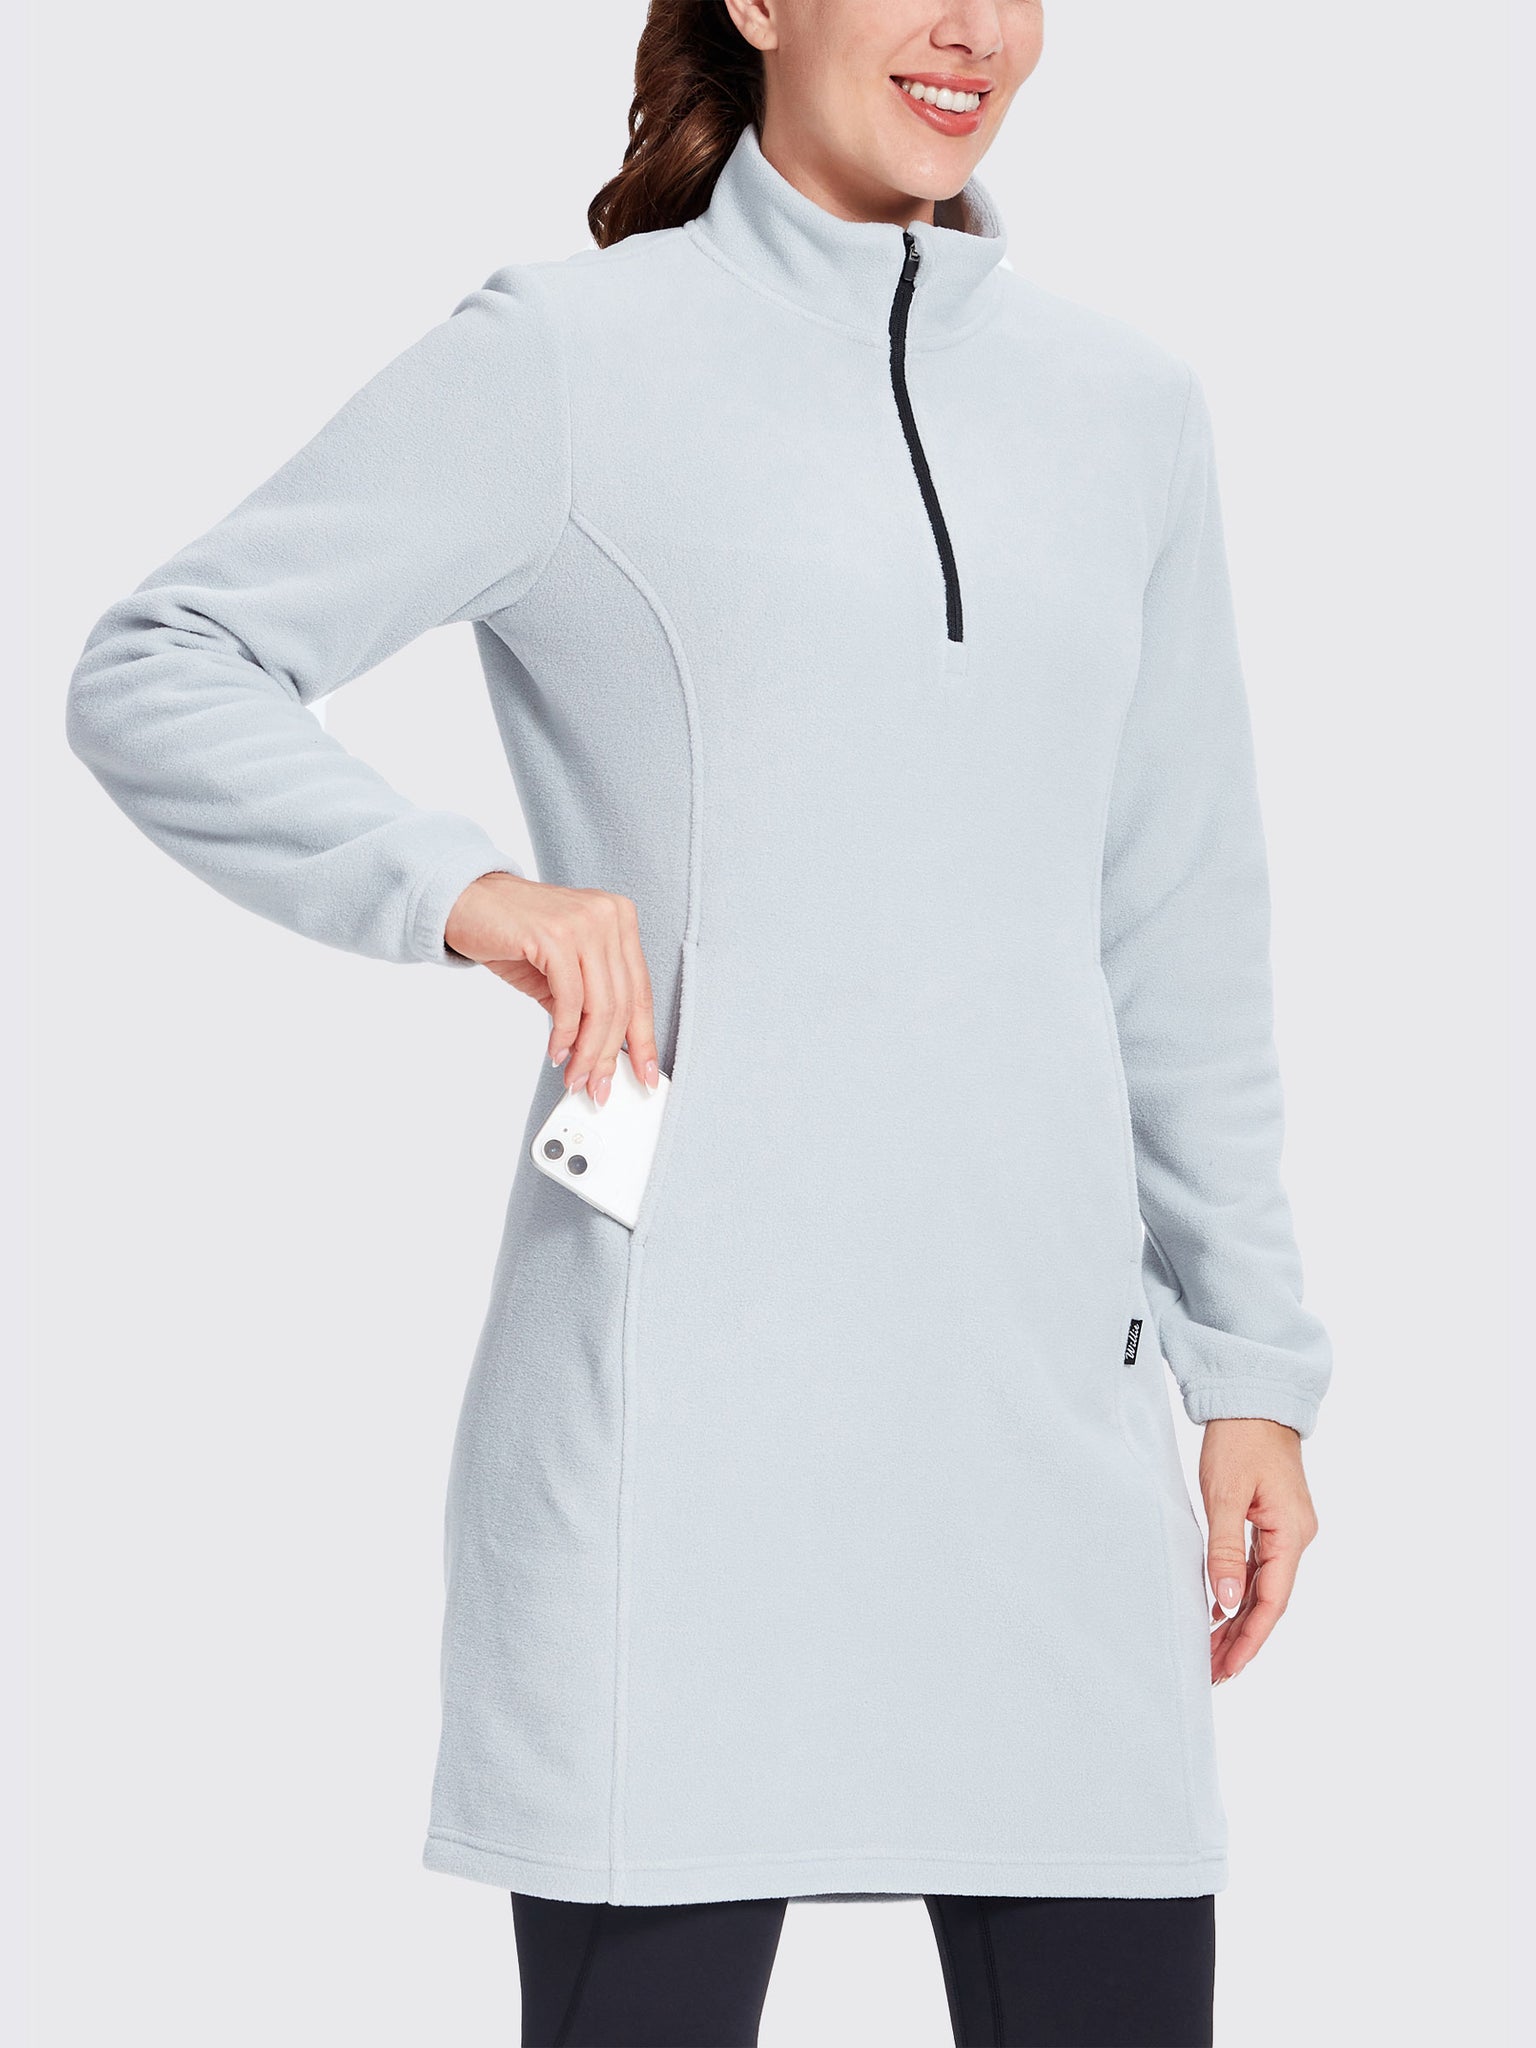 Women's Fleece Long-Sleeve Turtleneck Dress Gray2